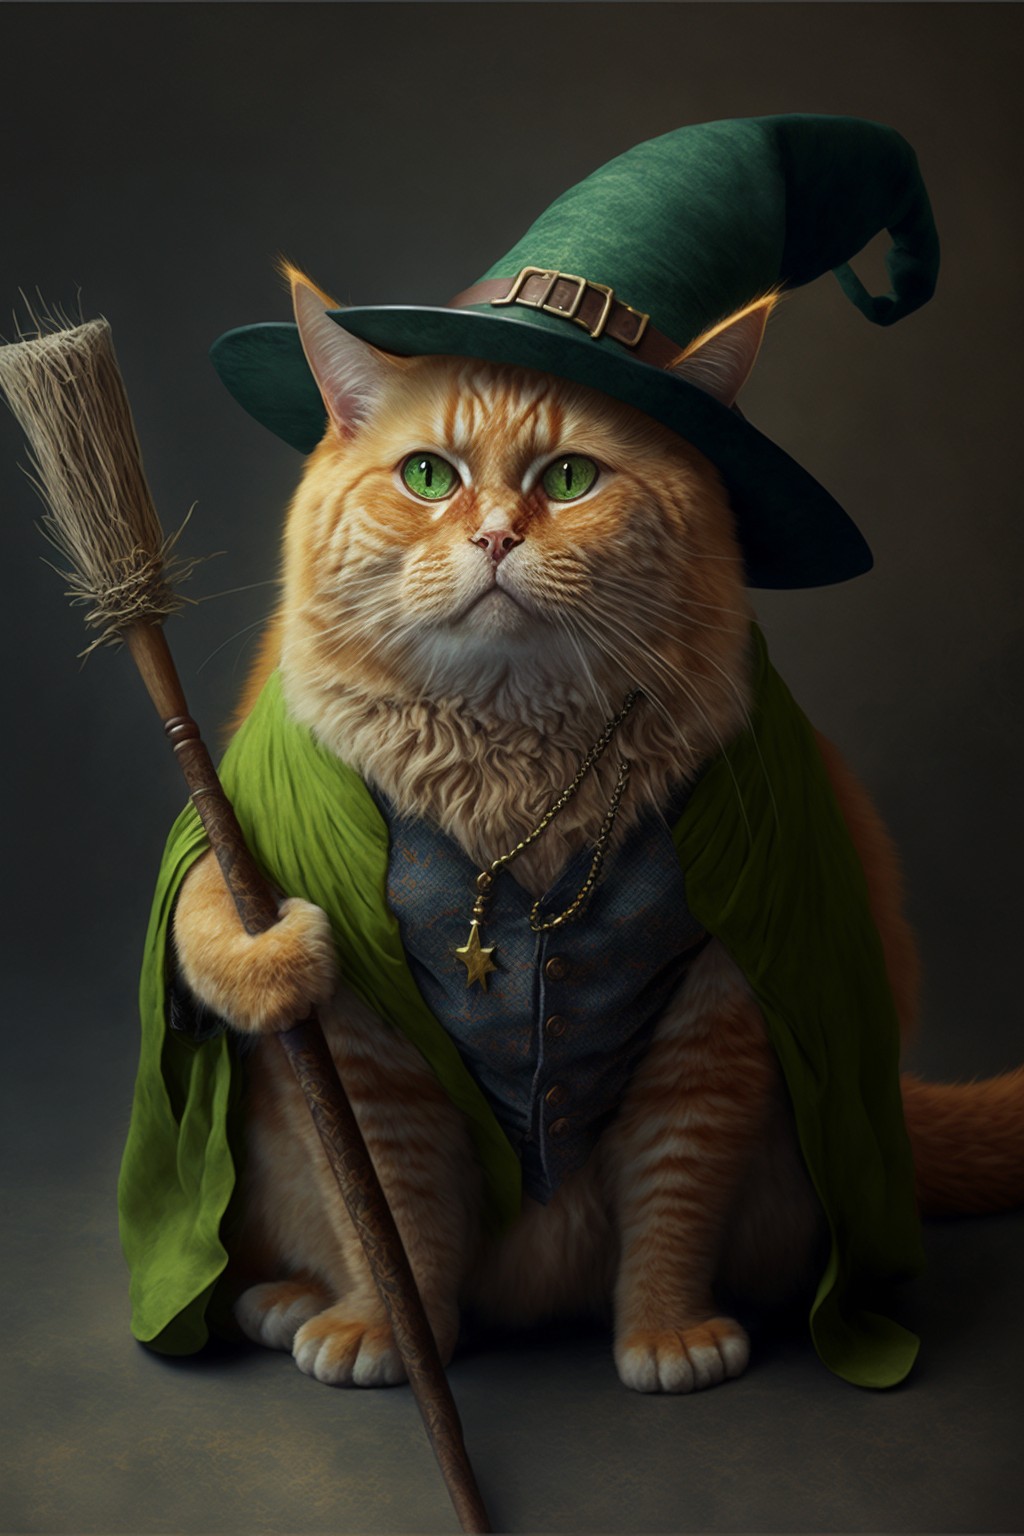 Hogwarts cat wizard in green hat